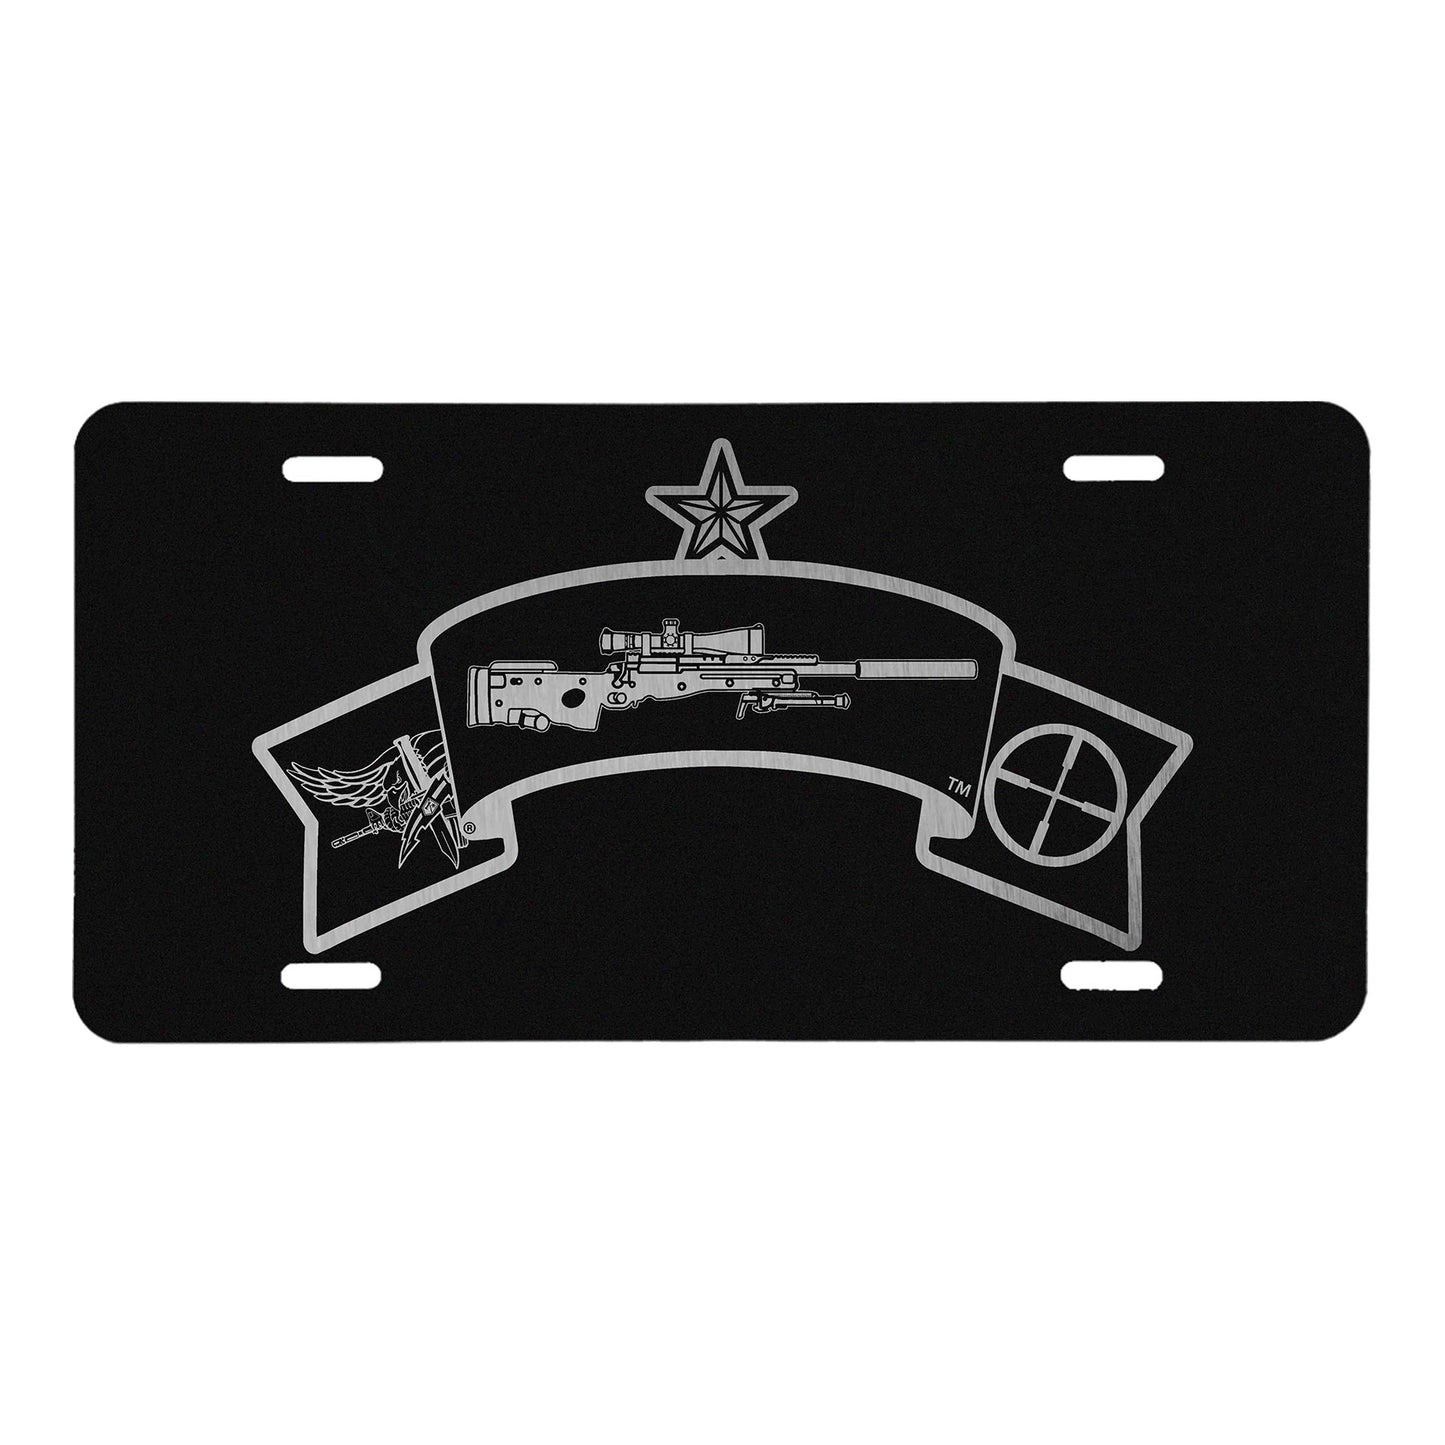 Sniper Qualification License Plate